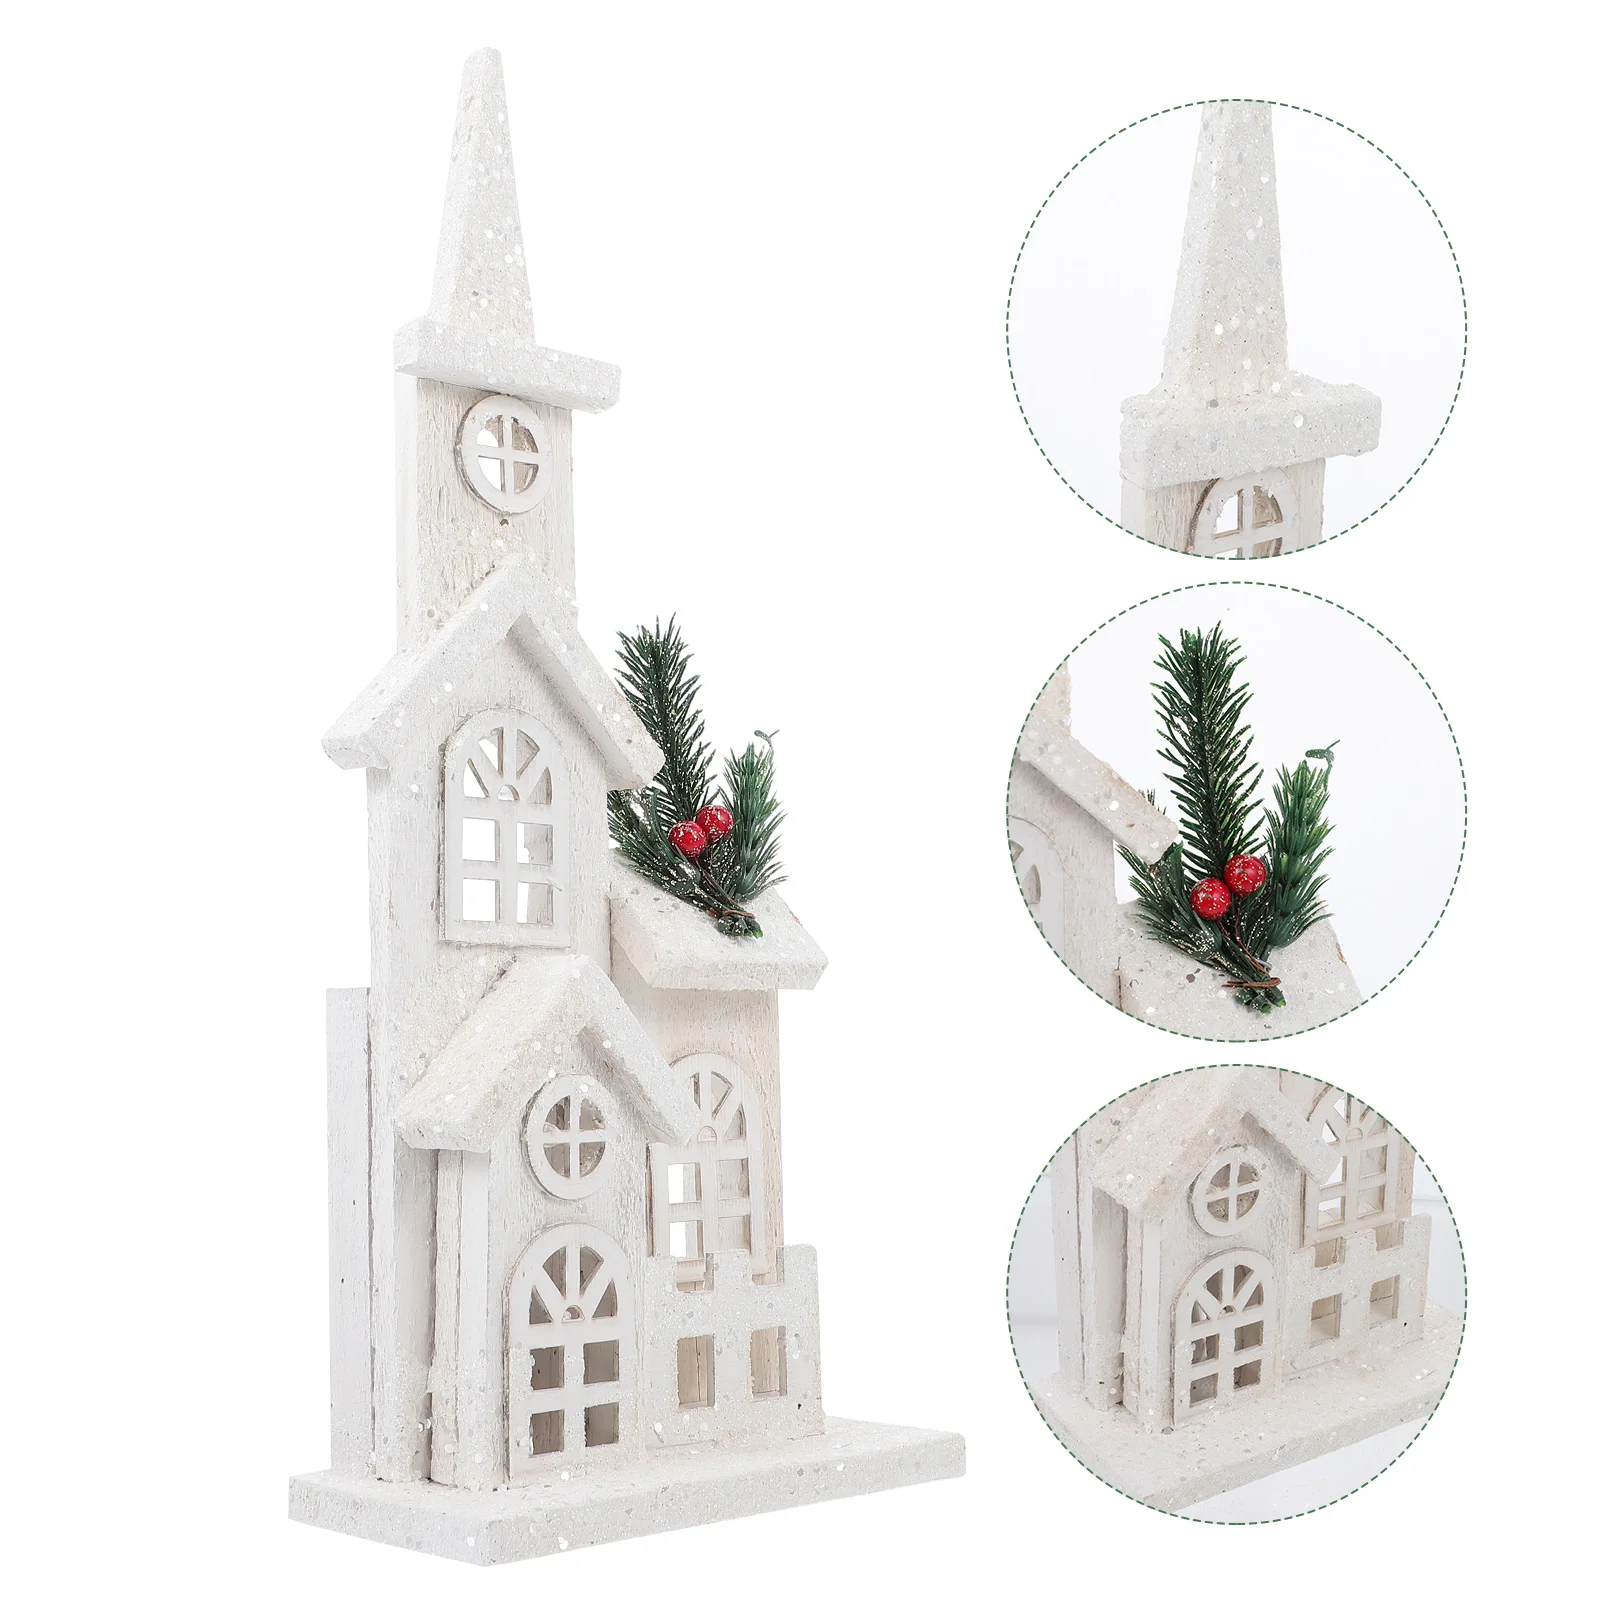 

Christmas House Home Desktop Adorn Delicate Decor Showcase Ornament Wooden Craft Xmas Adornment Prop Decorations